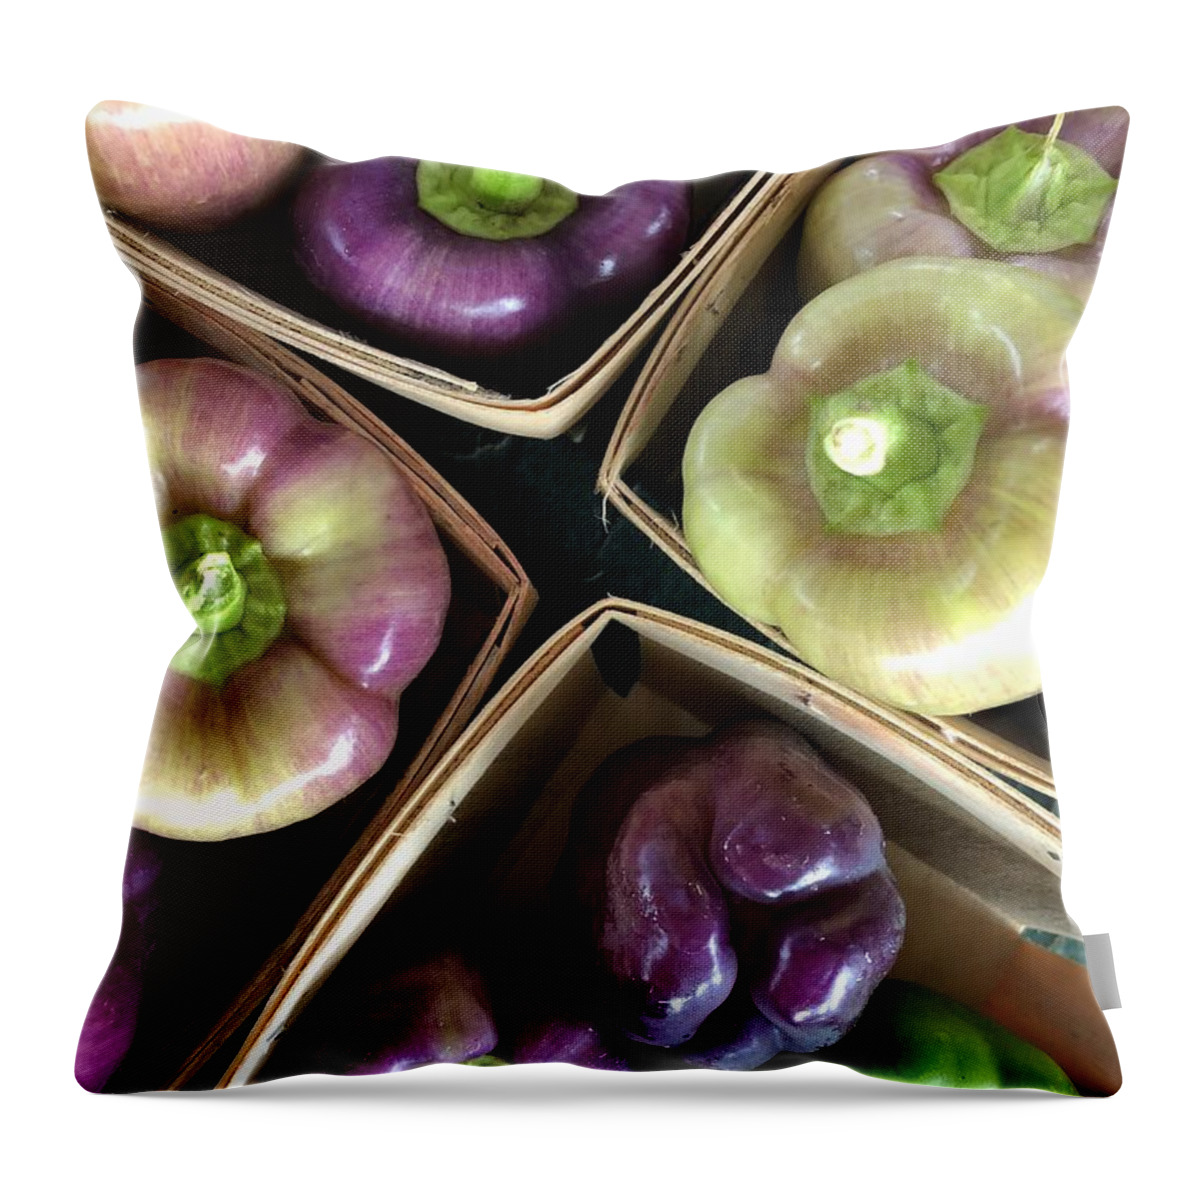 Freshness Throw Pillow featuring the photograph Purple and White Bell Peppers by Jori Reijonen